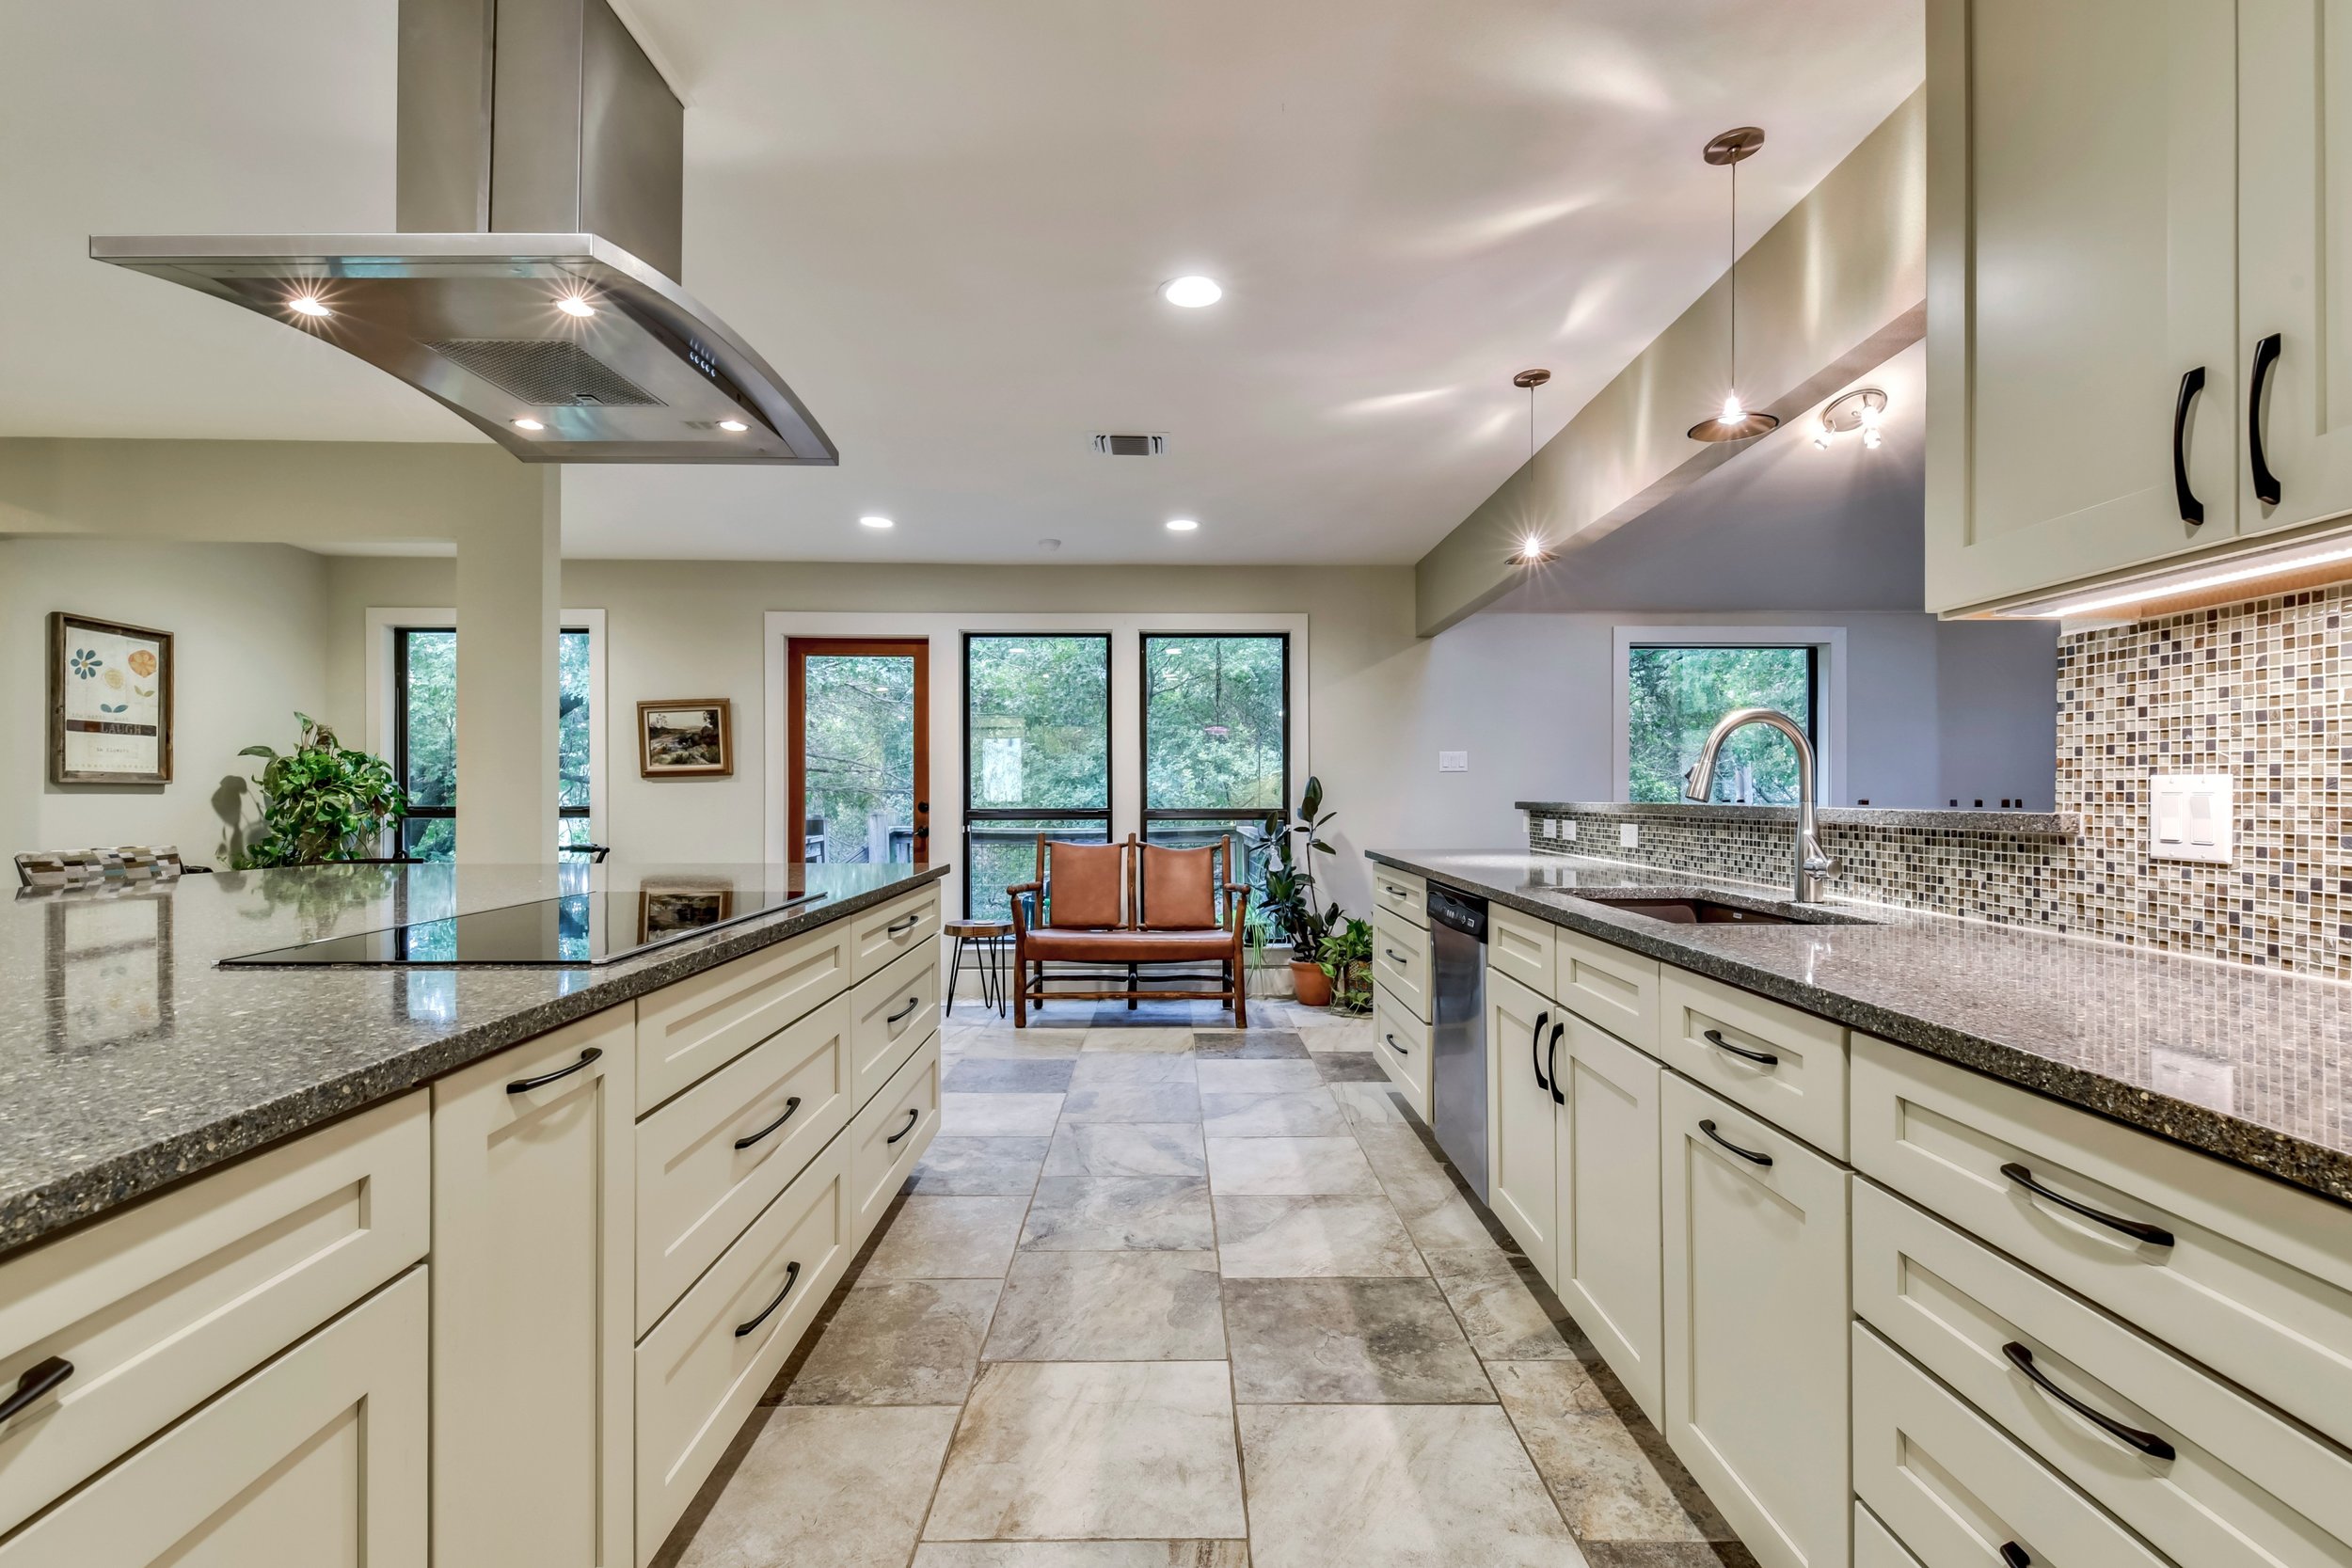 Kitchen Design Remodel with Granite Countertops